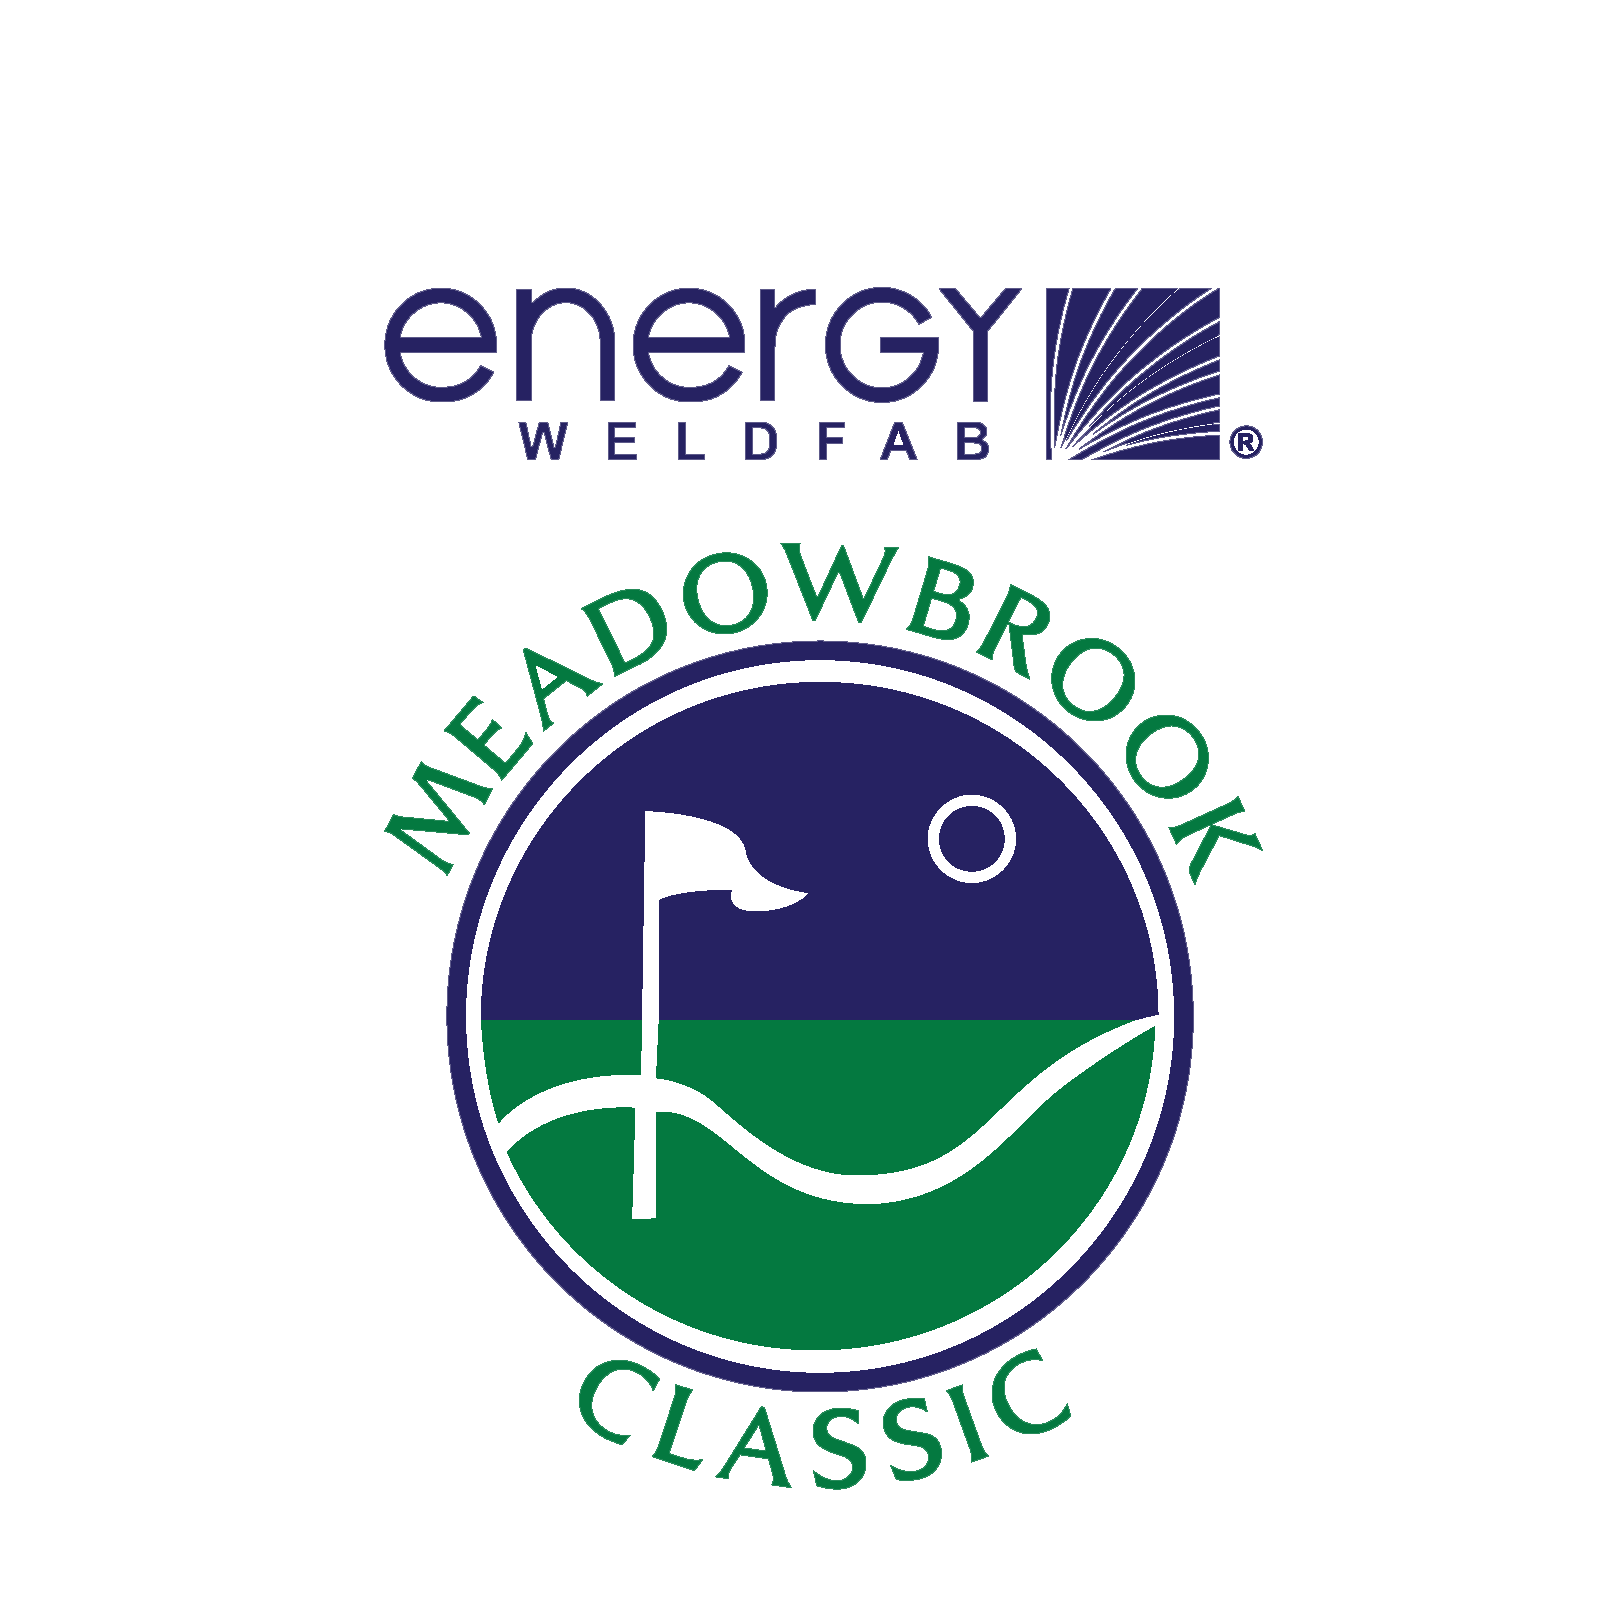 Energy Weldfab Meadowbrook Classic